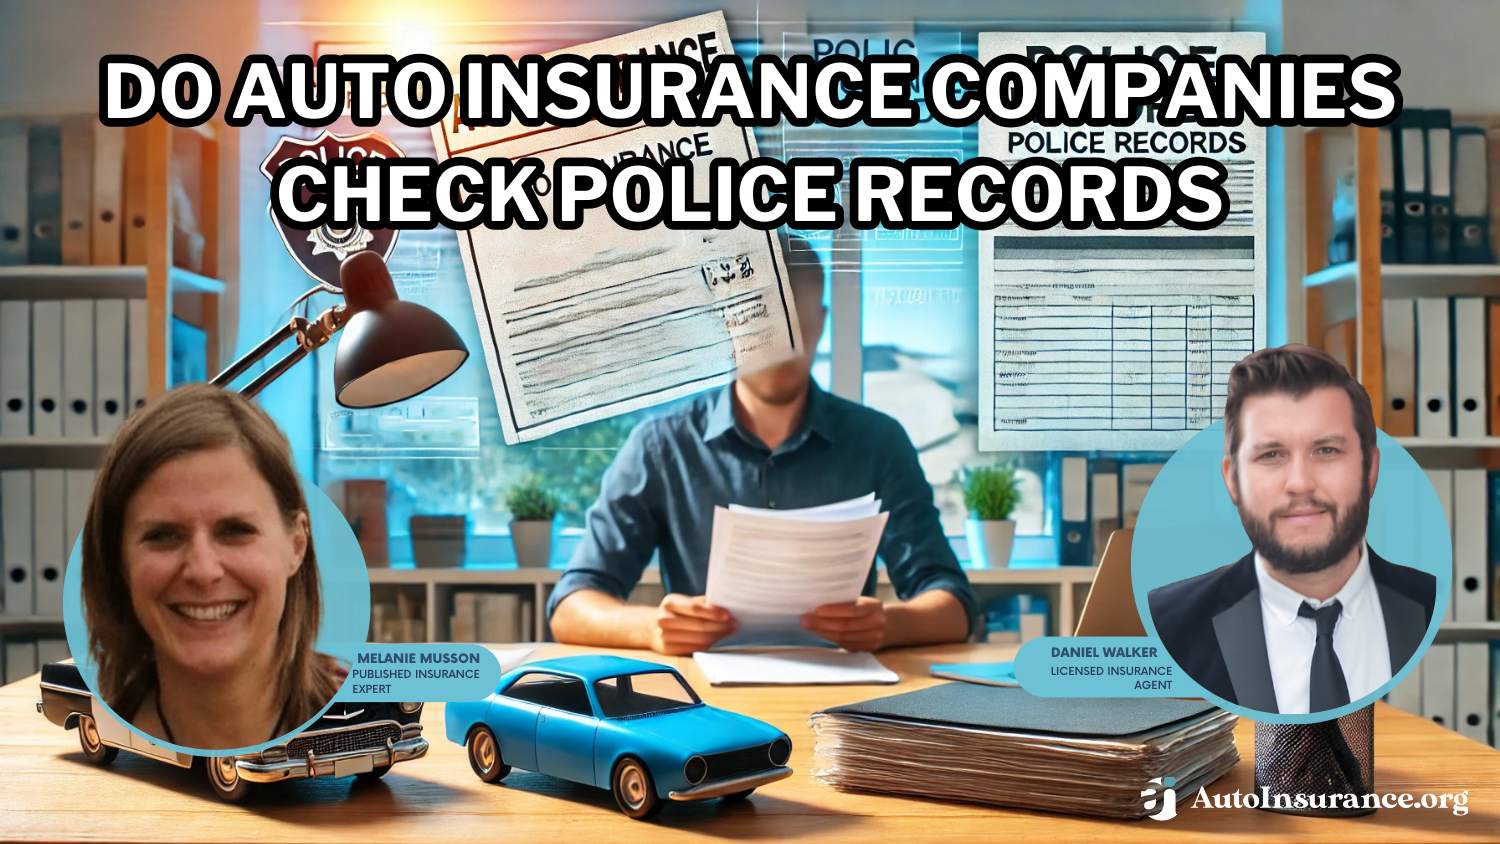 Do auto insurance companies check police records?